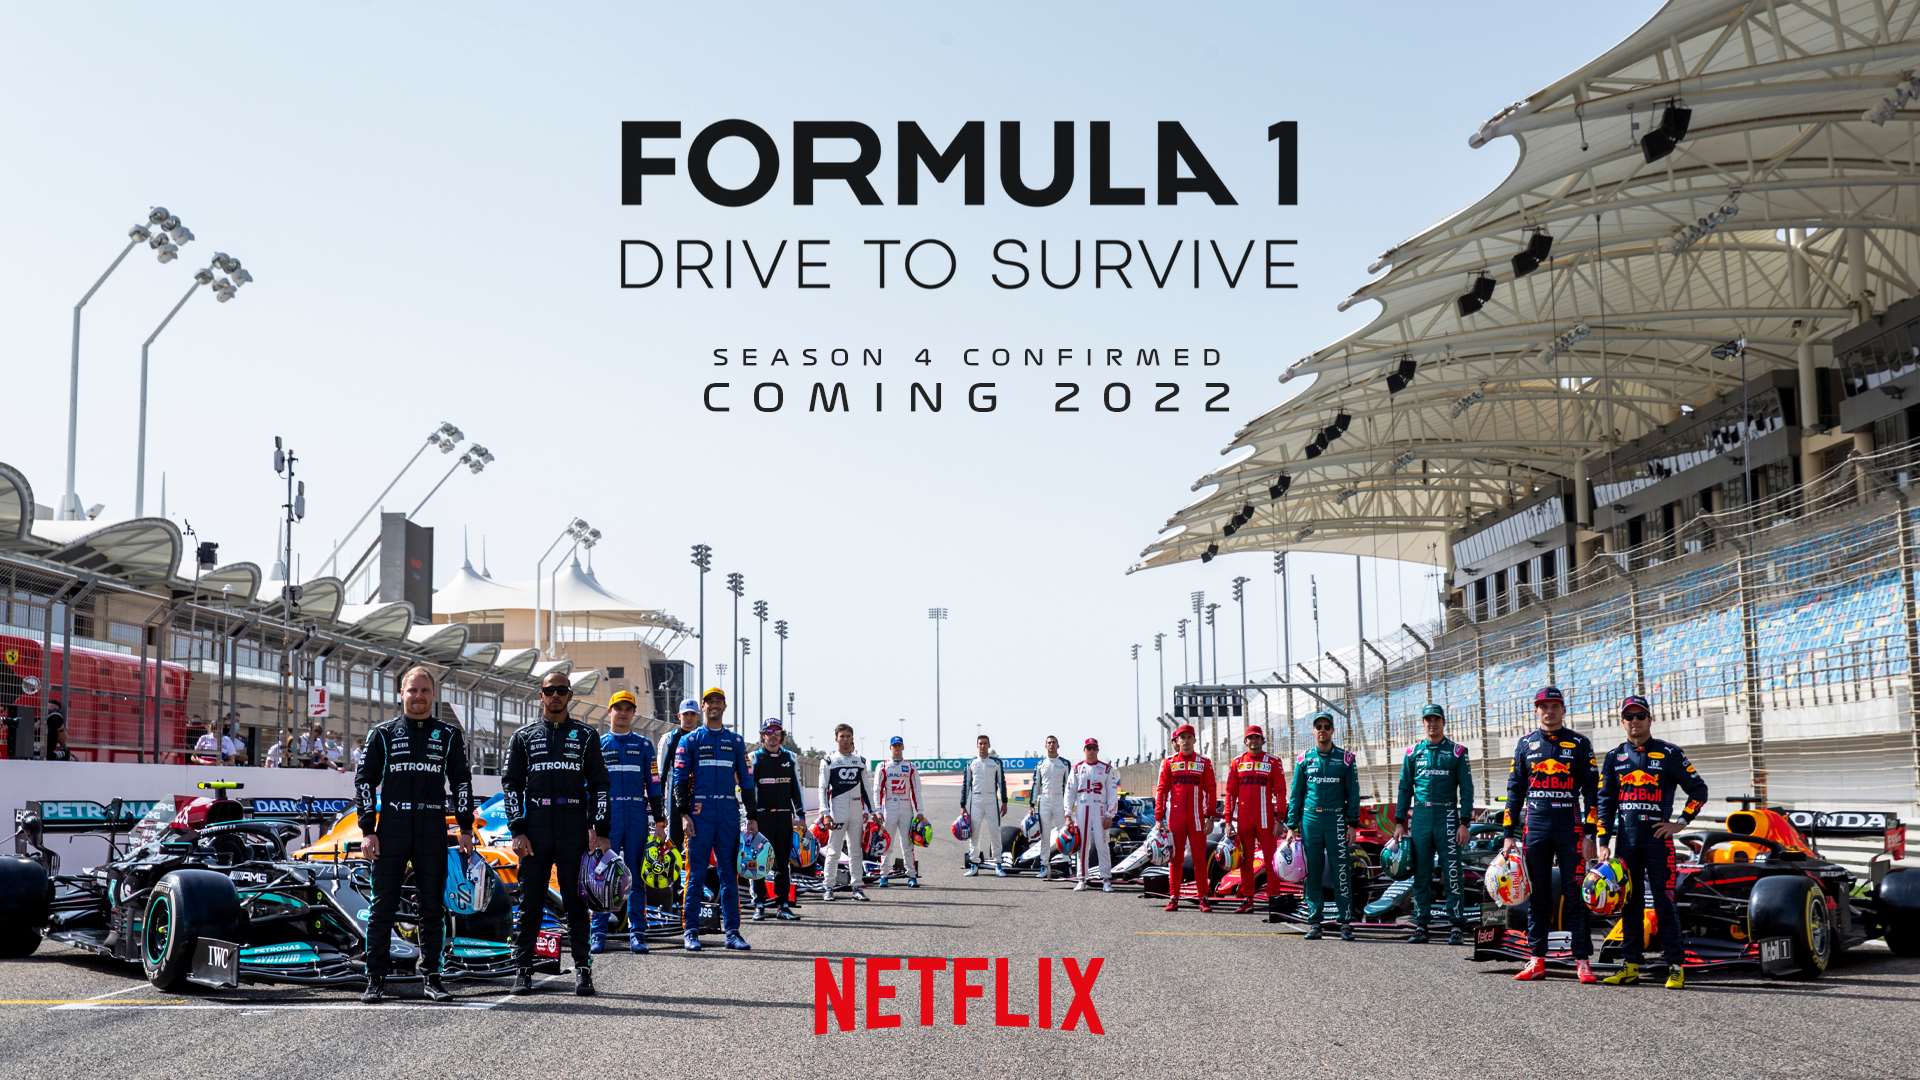 f1 drive to survive season 4 online